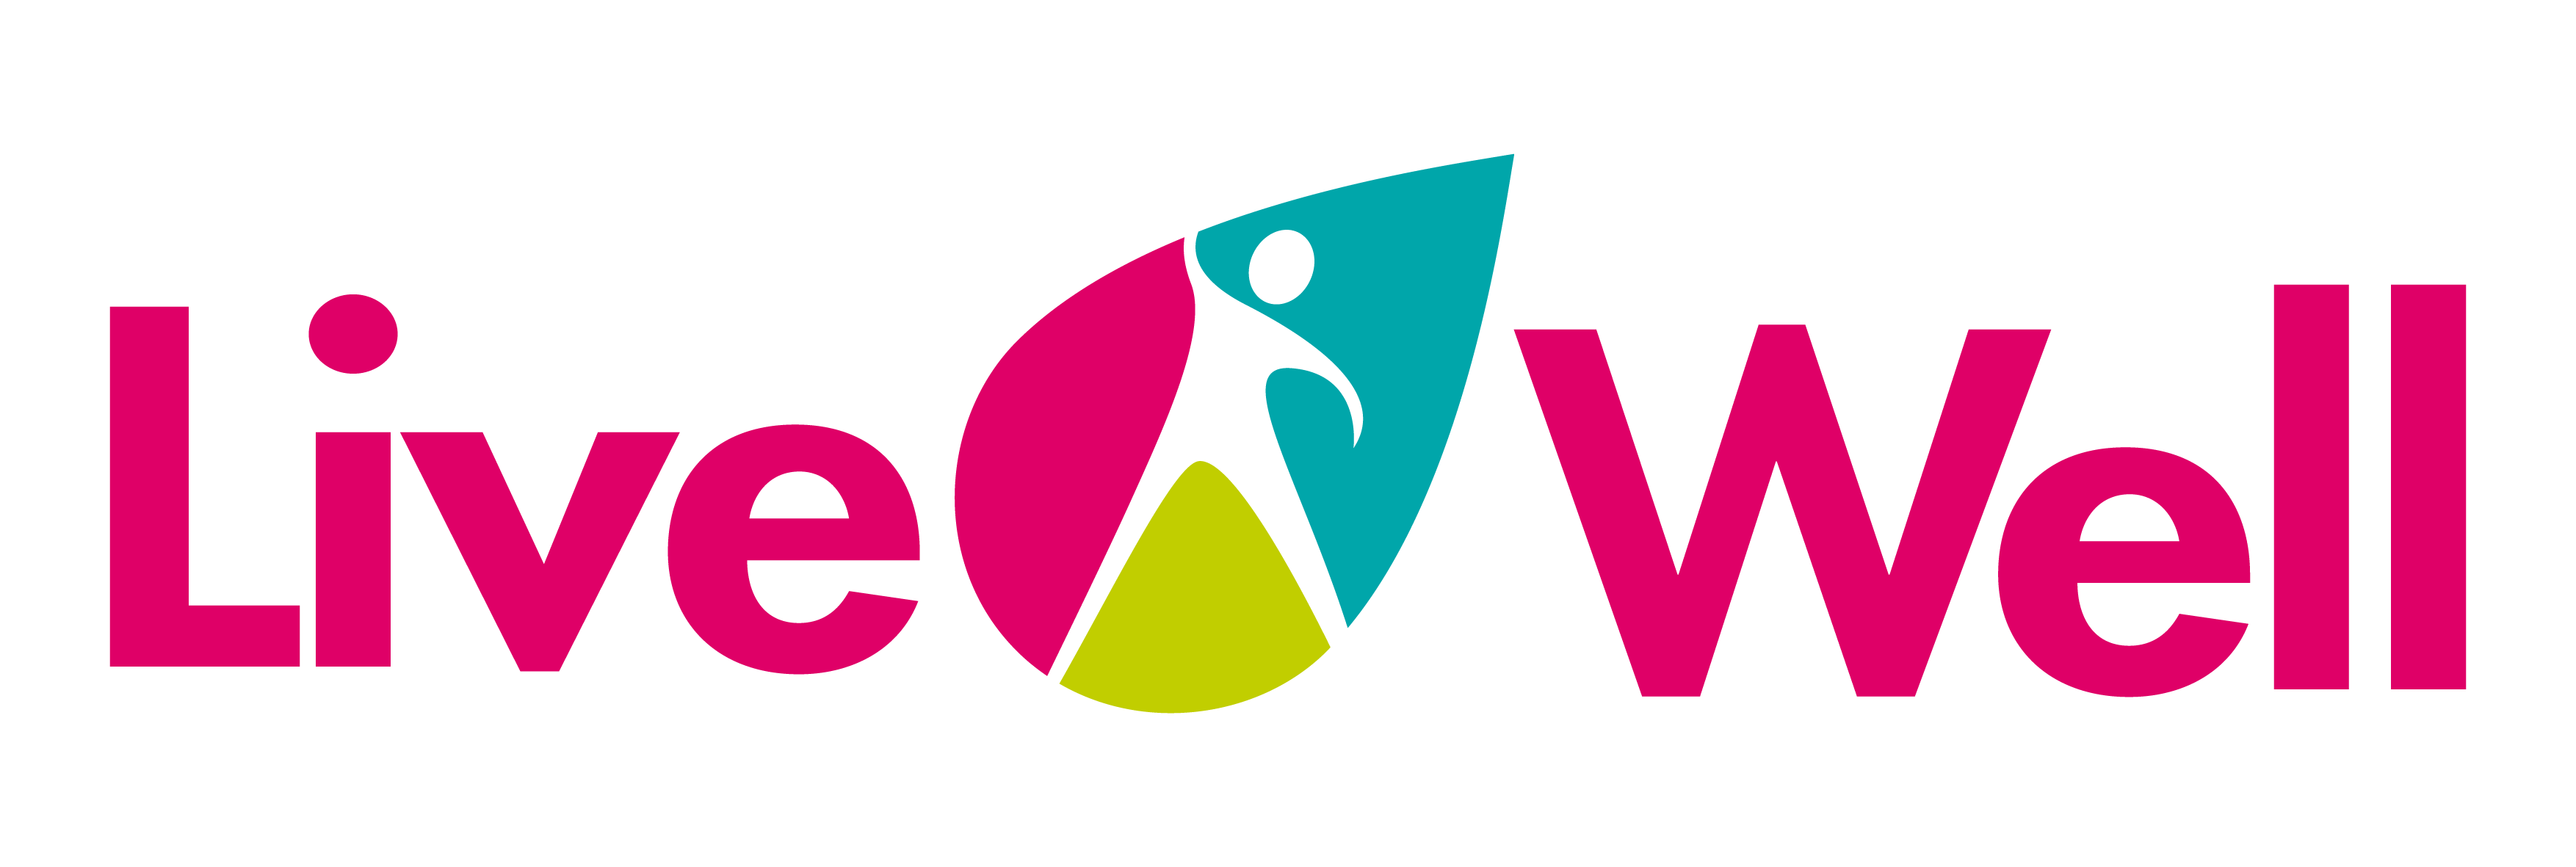 Live well logo